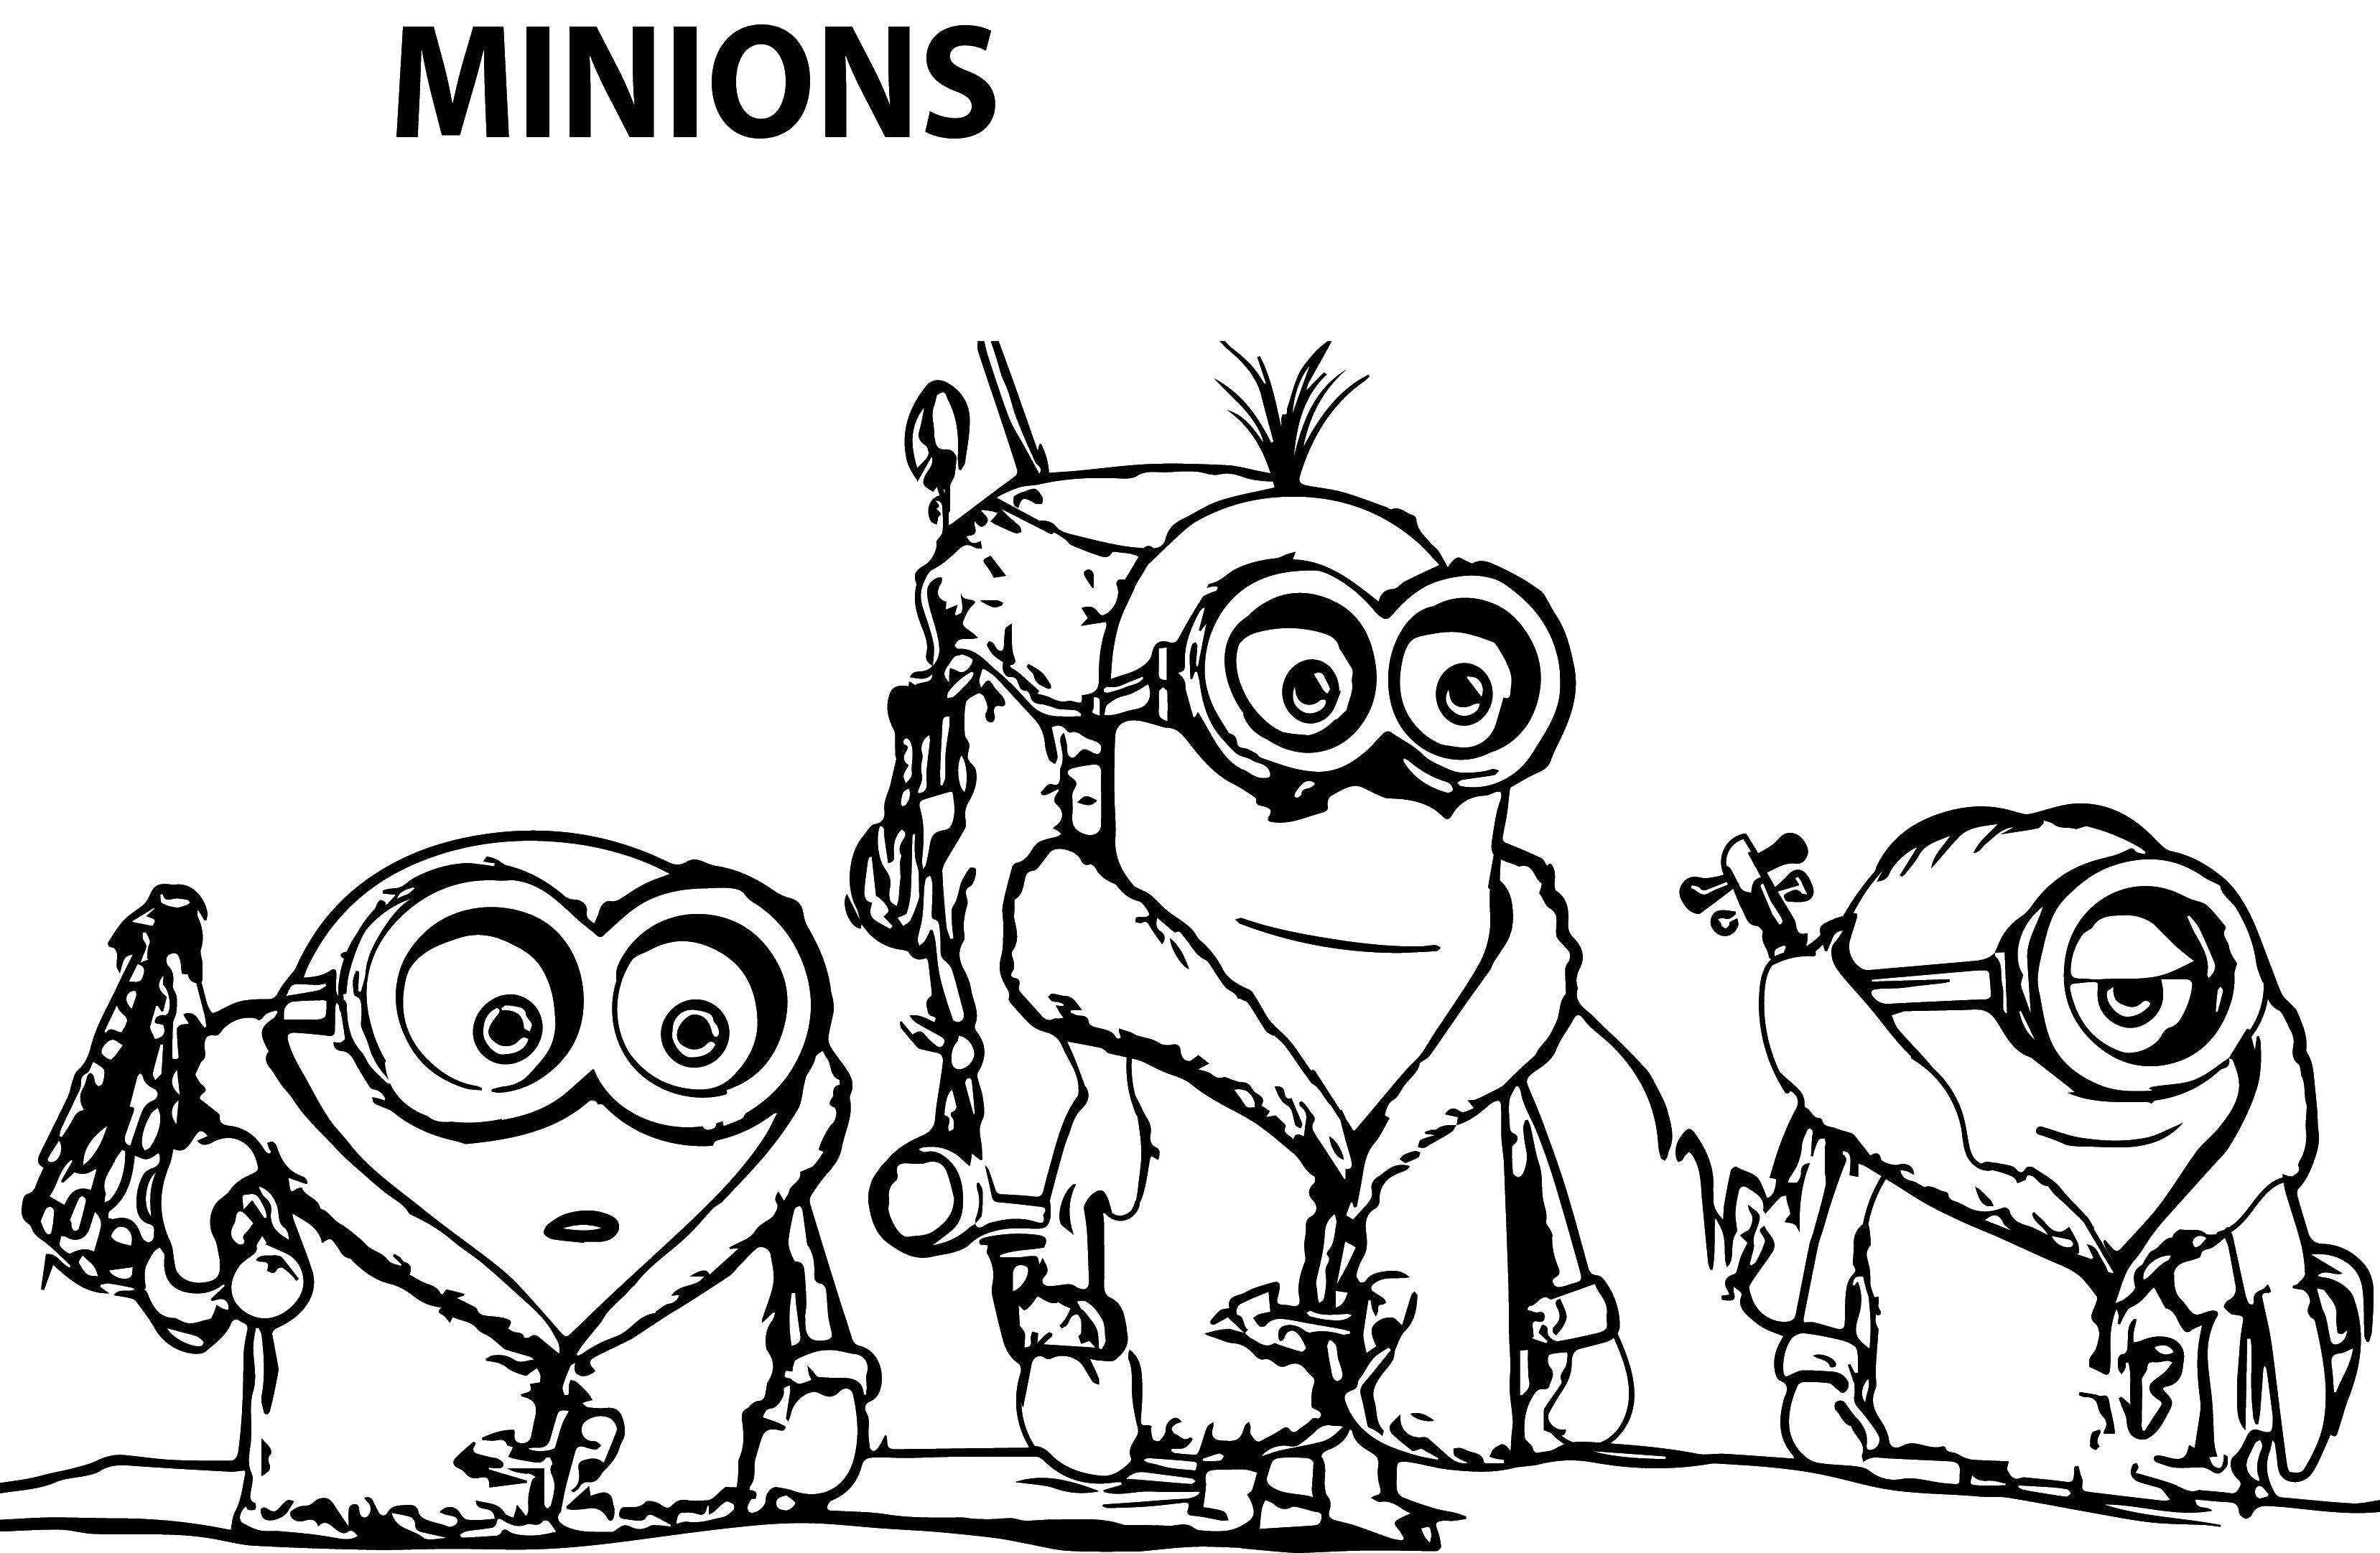 Coloring Minions. Category the minions. Tags:  minions, cartoons.